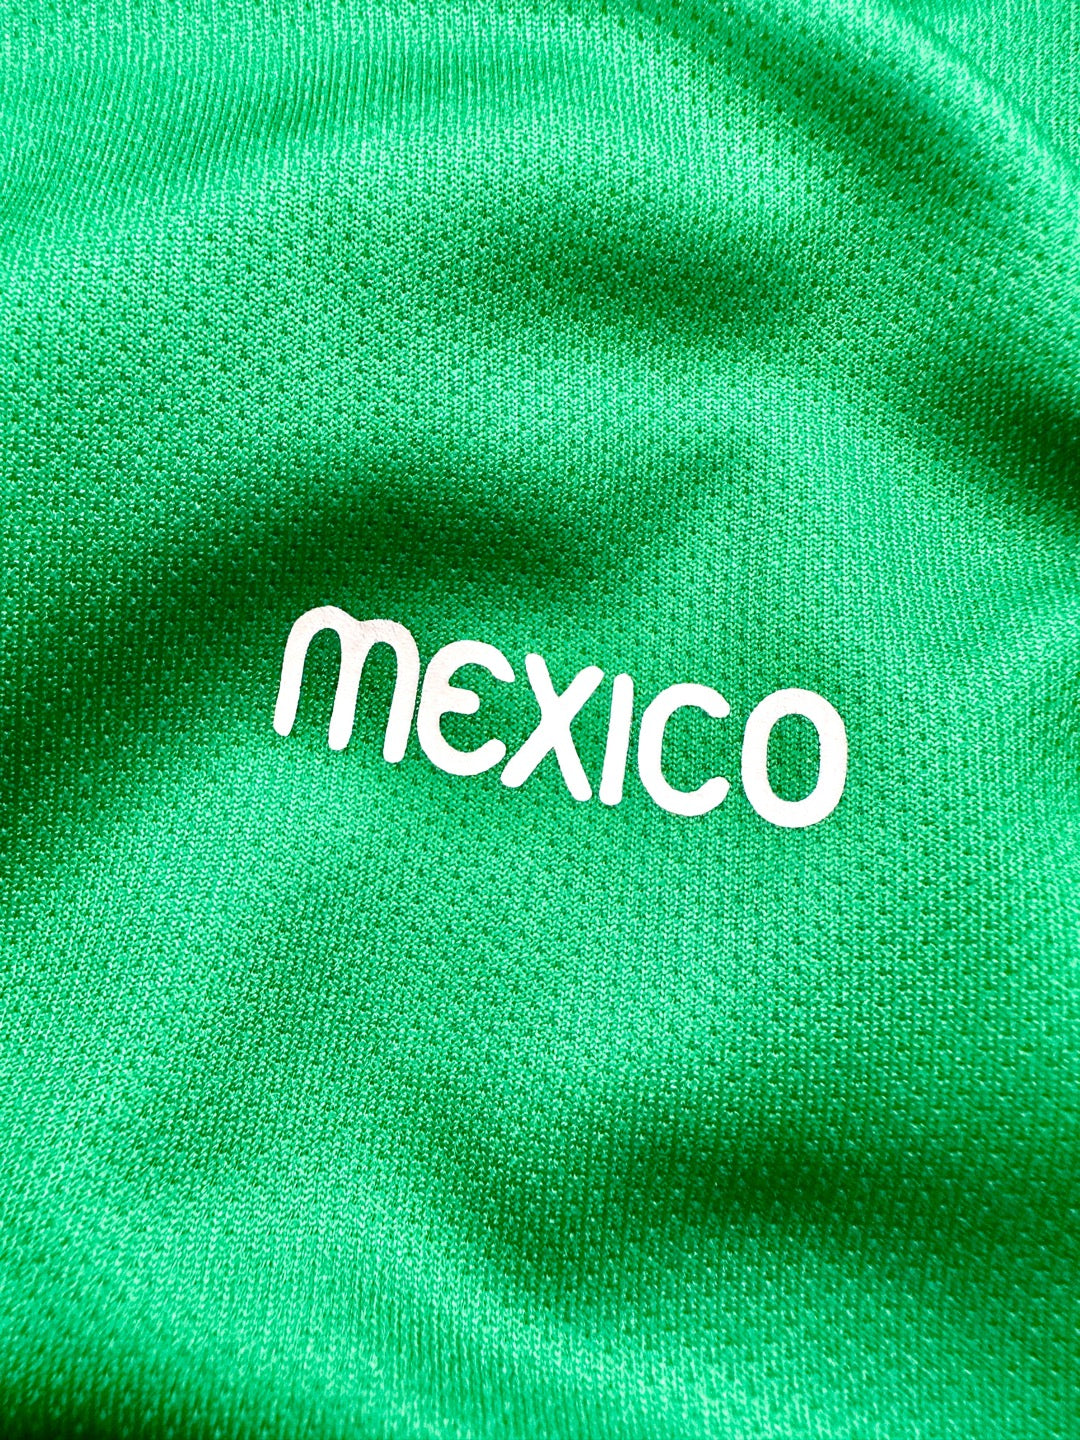 Jersey Retro México Copa Mundial 2006 Local Marquez bandera